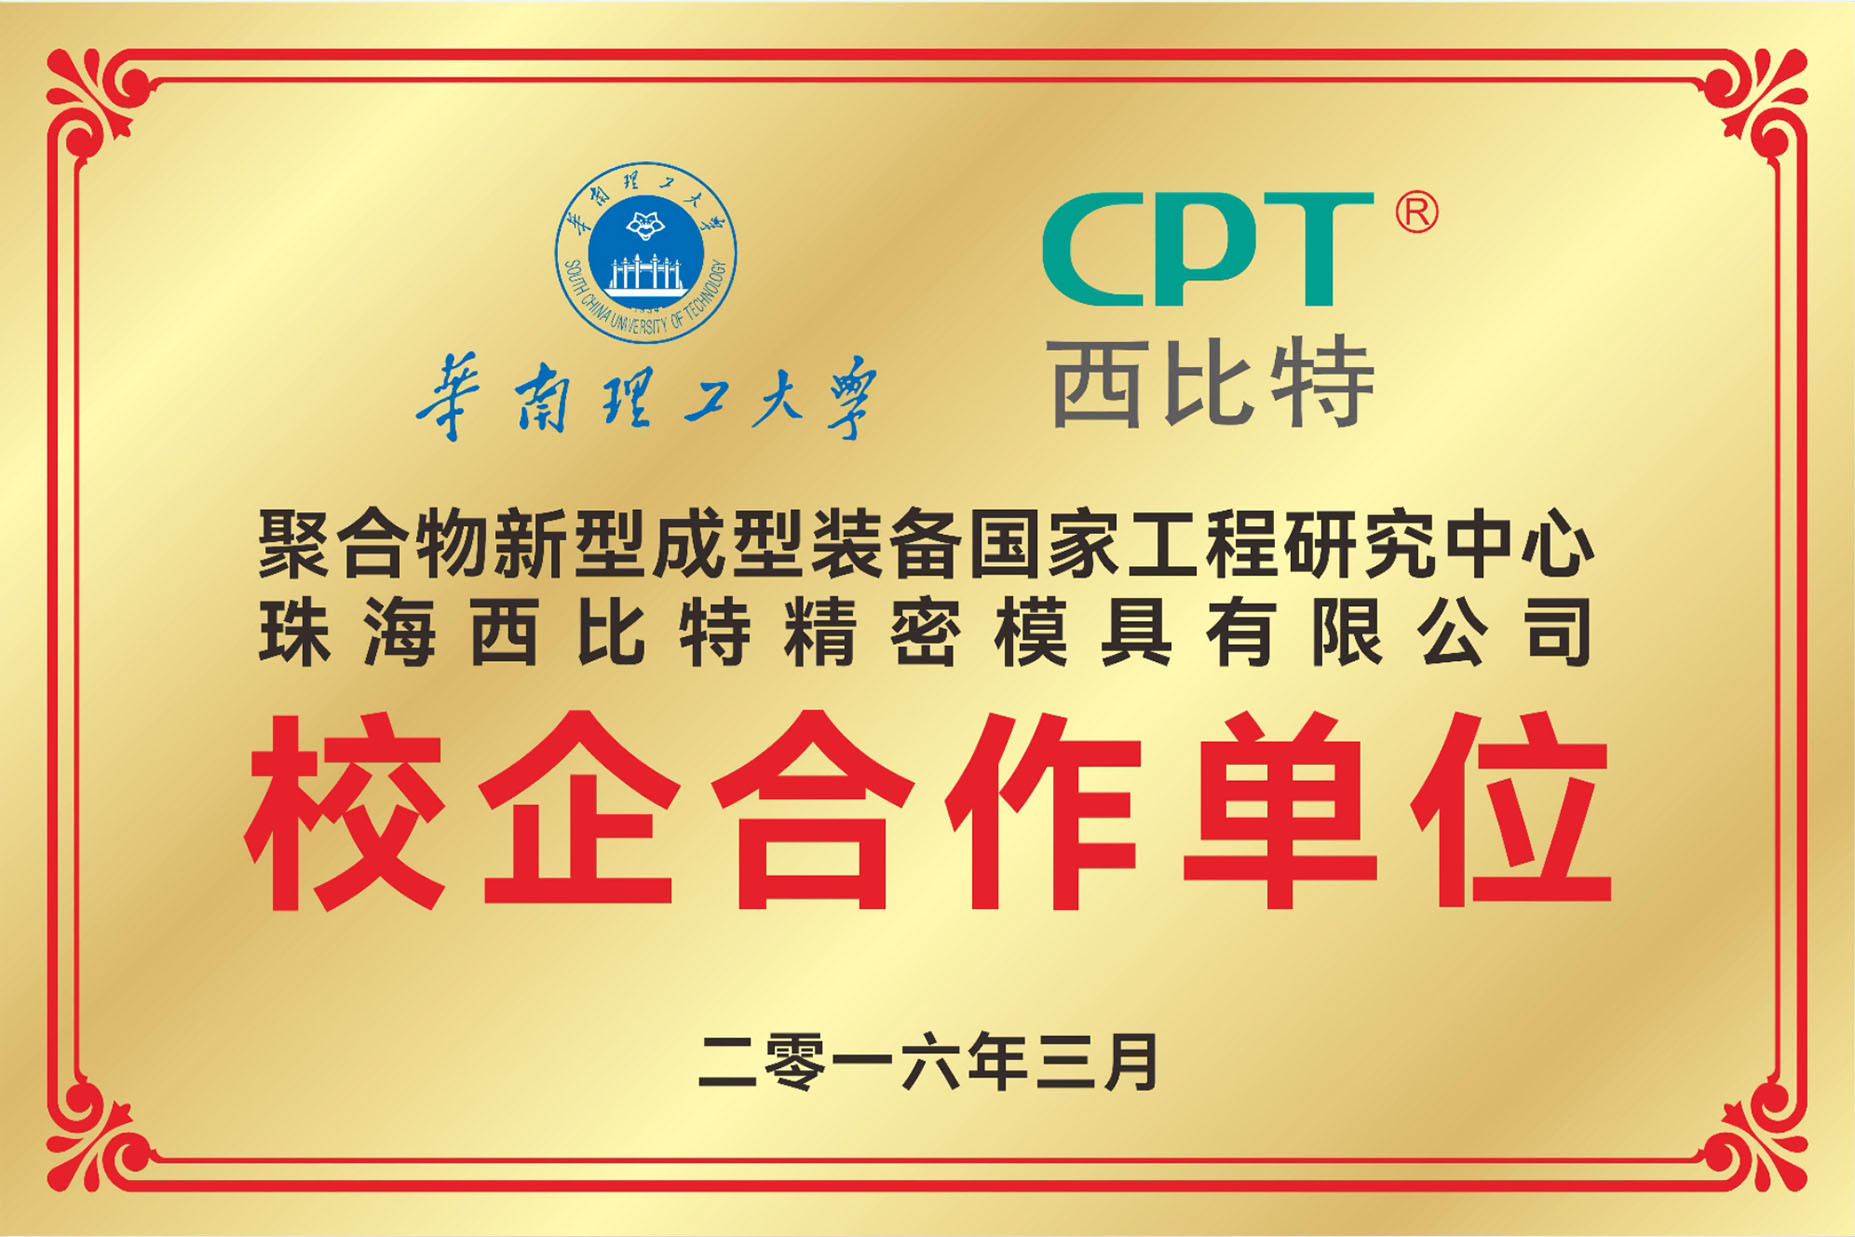 South China University of Technology and Xibit University Enterprise Cooperation Unit